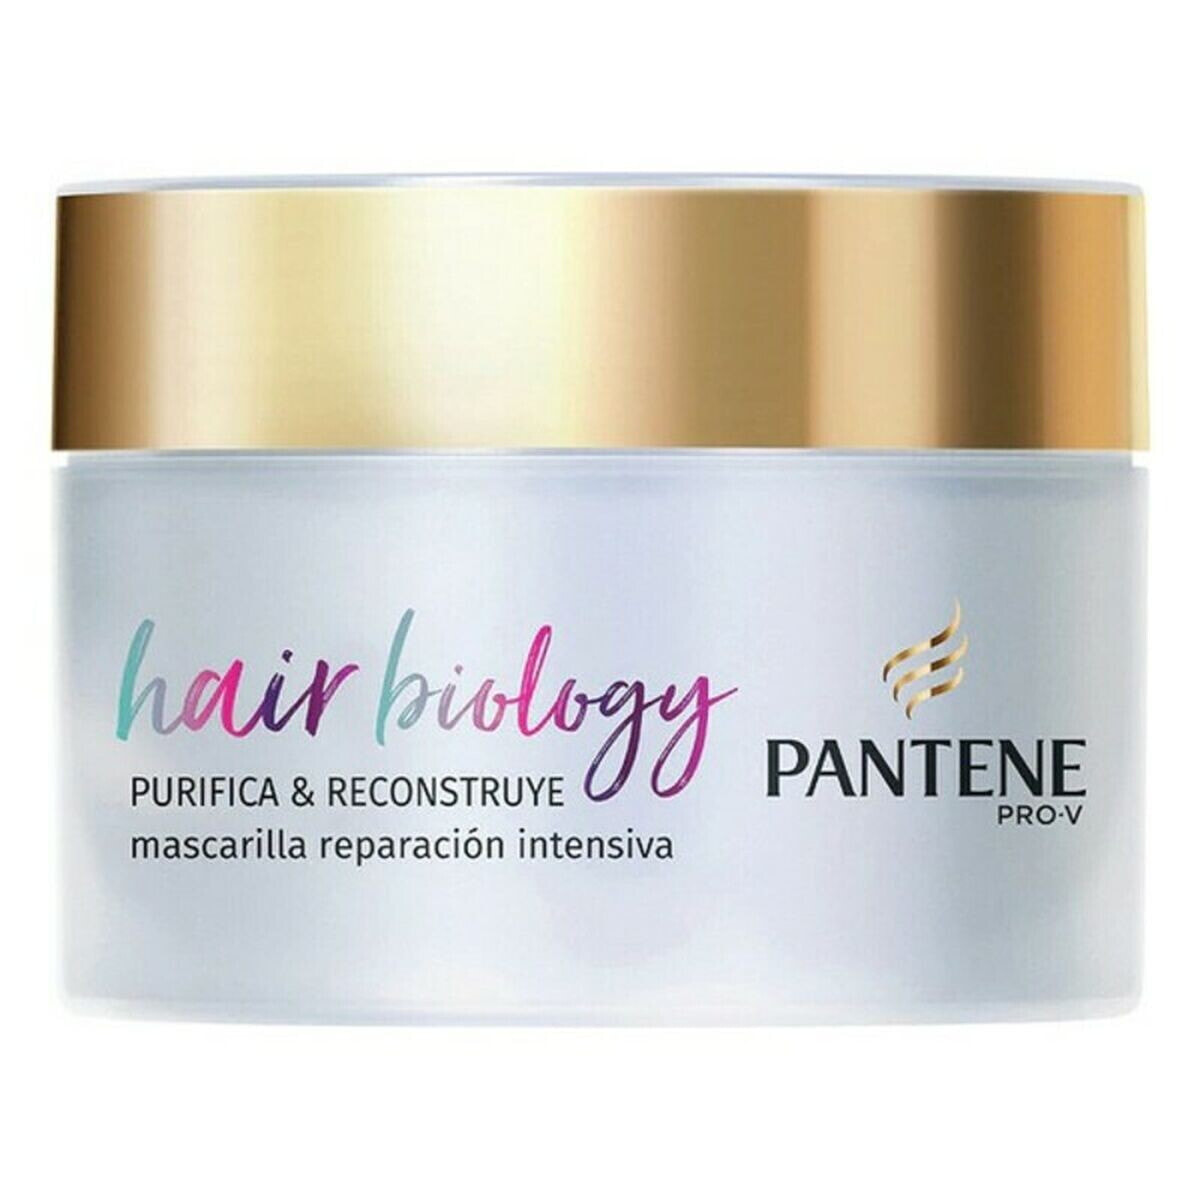 Капиллярная маска Hair Biology Purifica & Repara Pantene (160 ml)